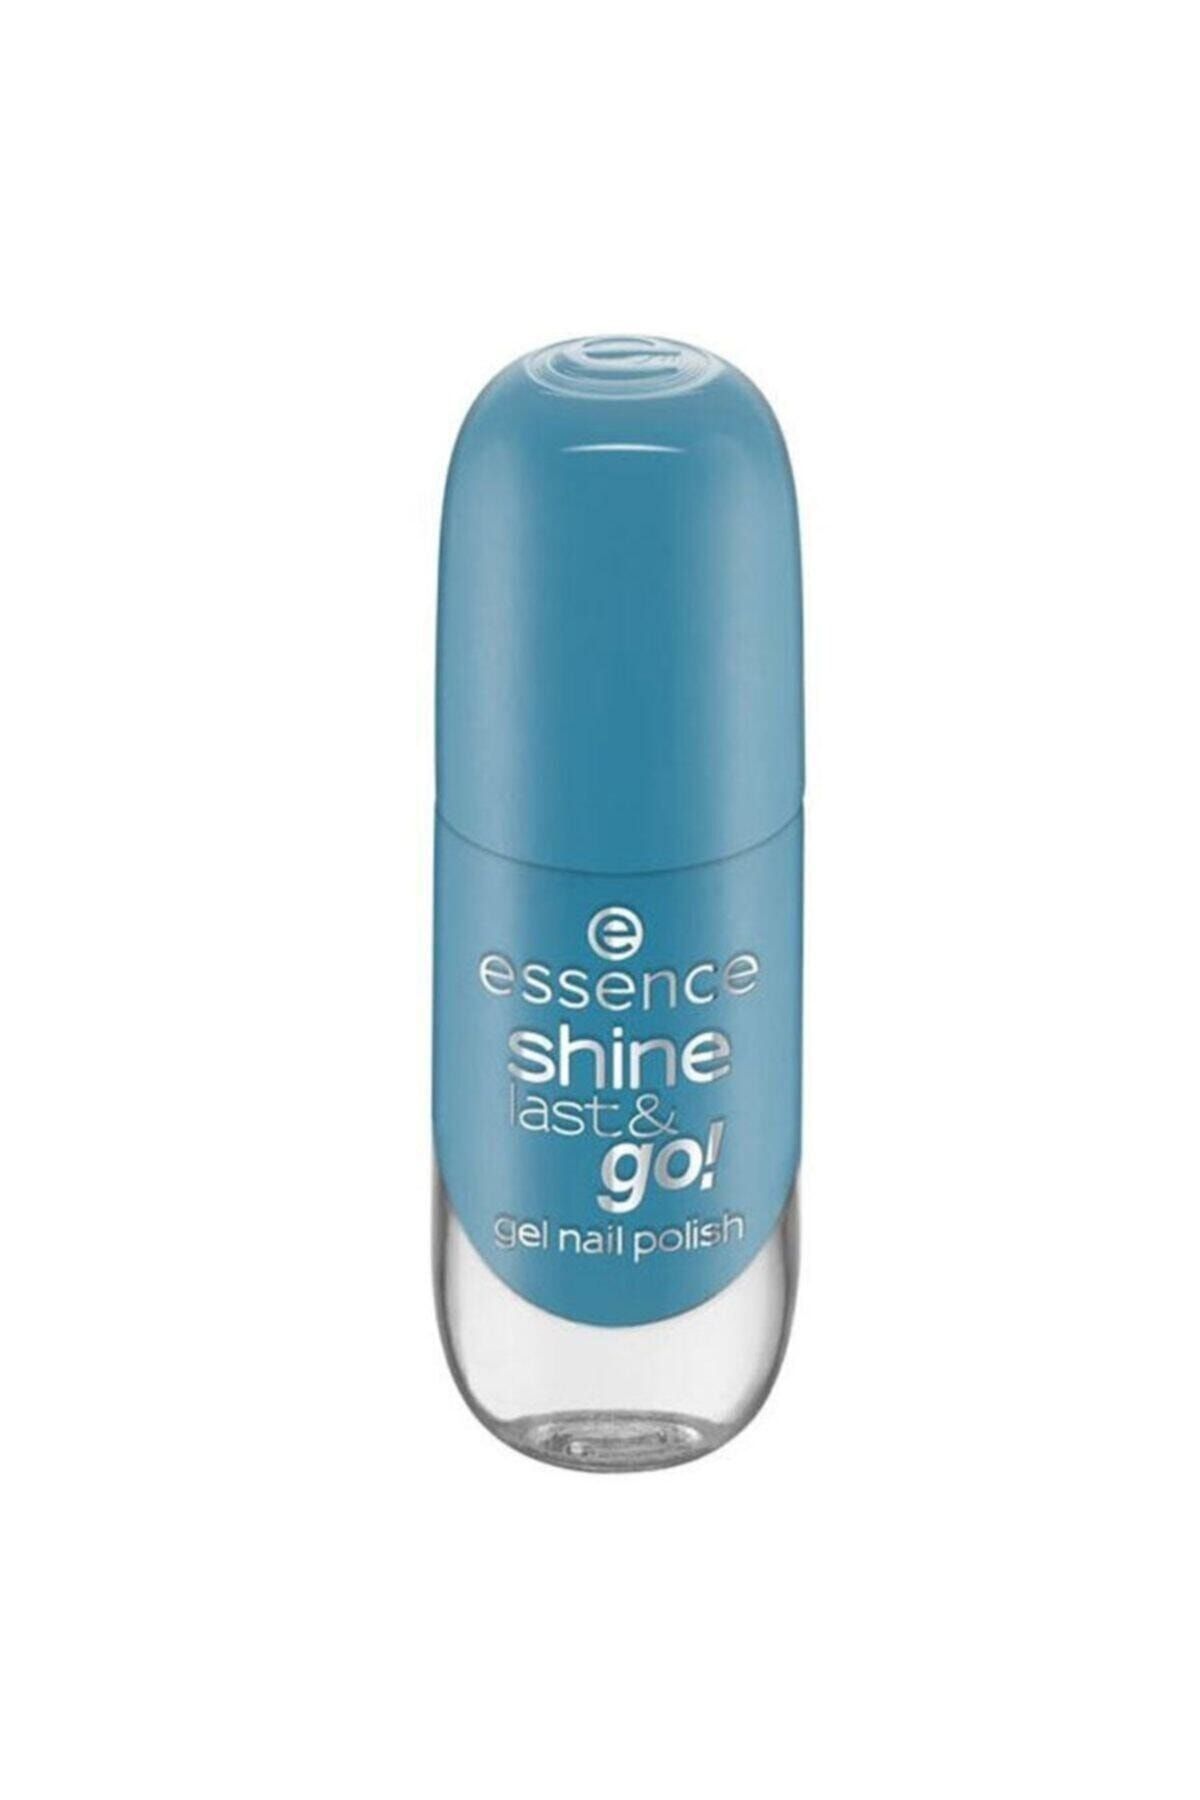 Essence Shine Last Go Gel Nail Polish - Jel Oje No:77 8ml